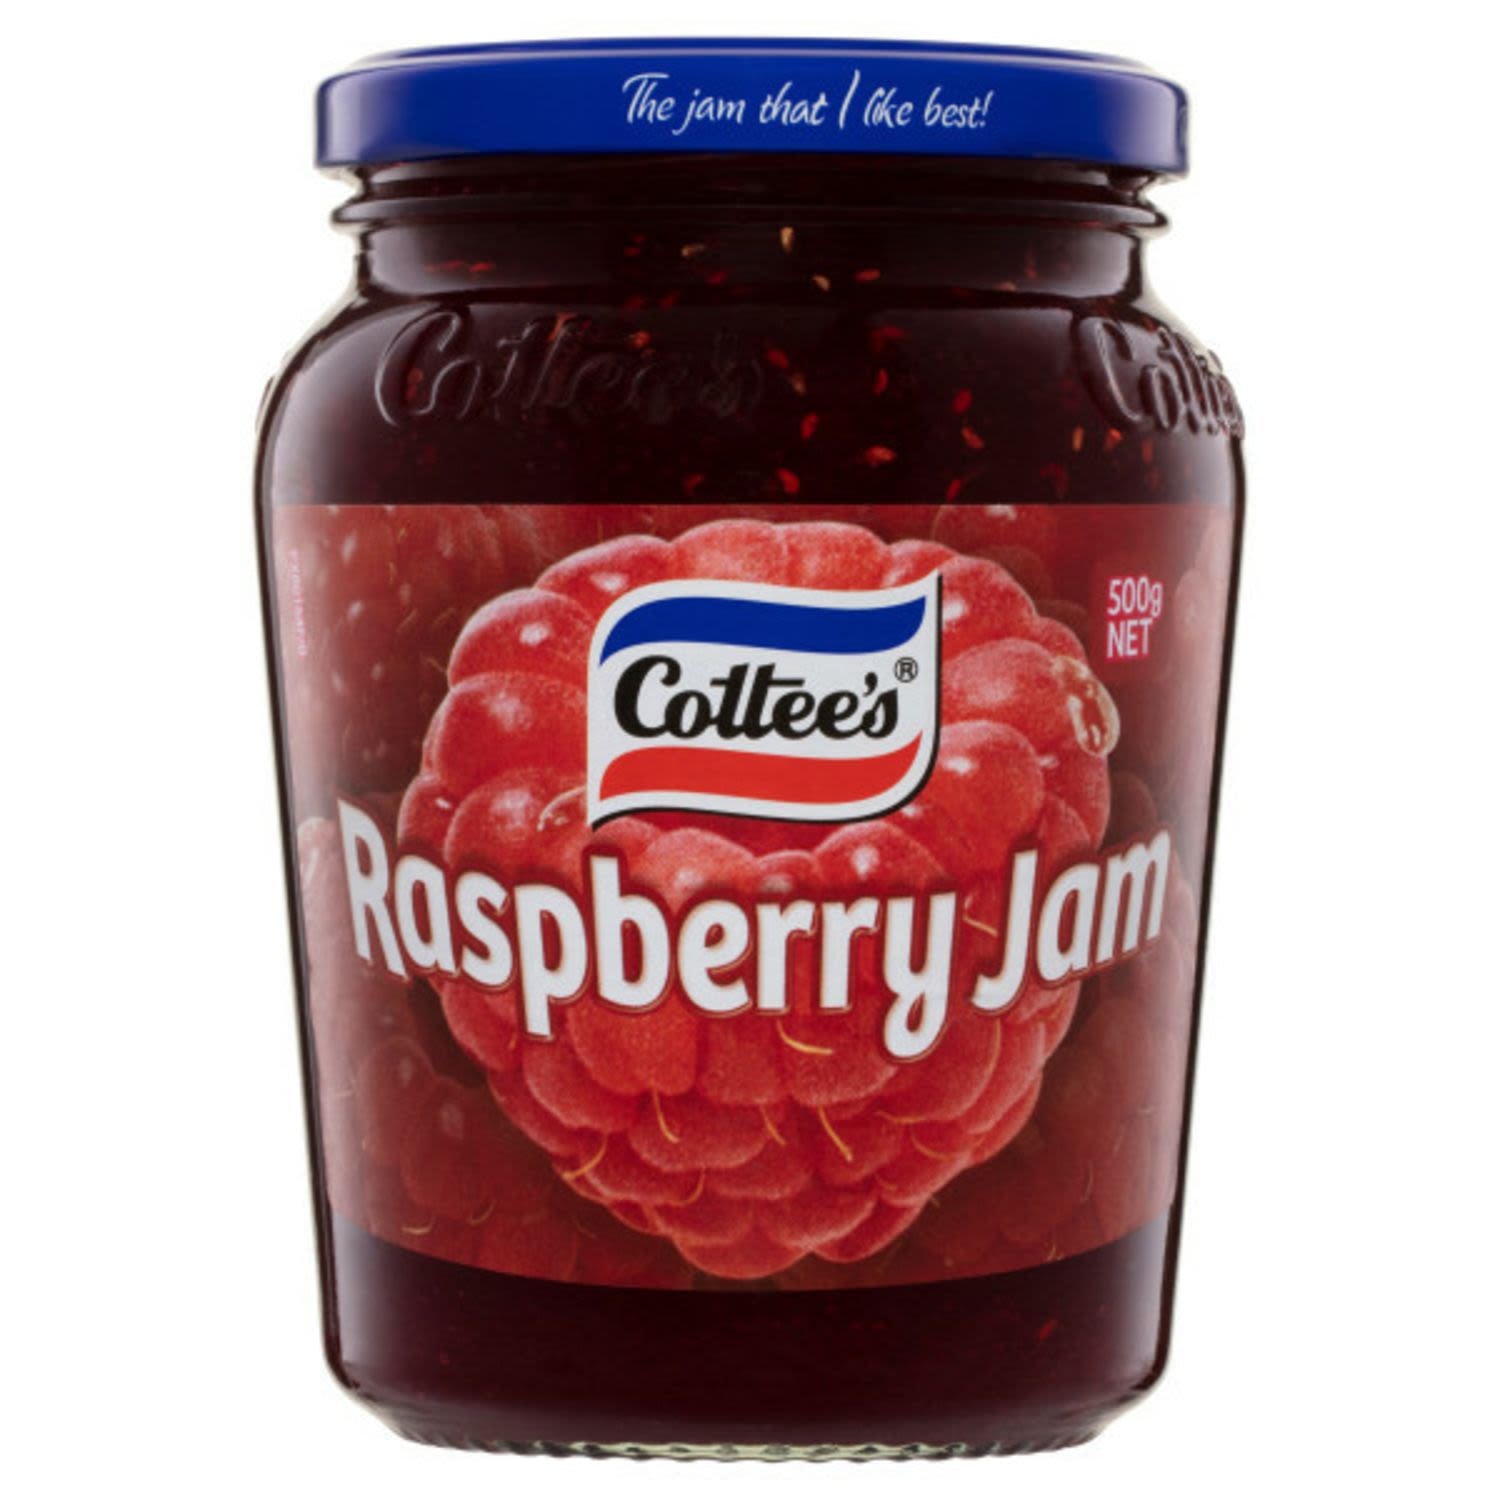 Cottee's Raspberry Jam 500g